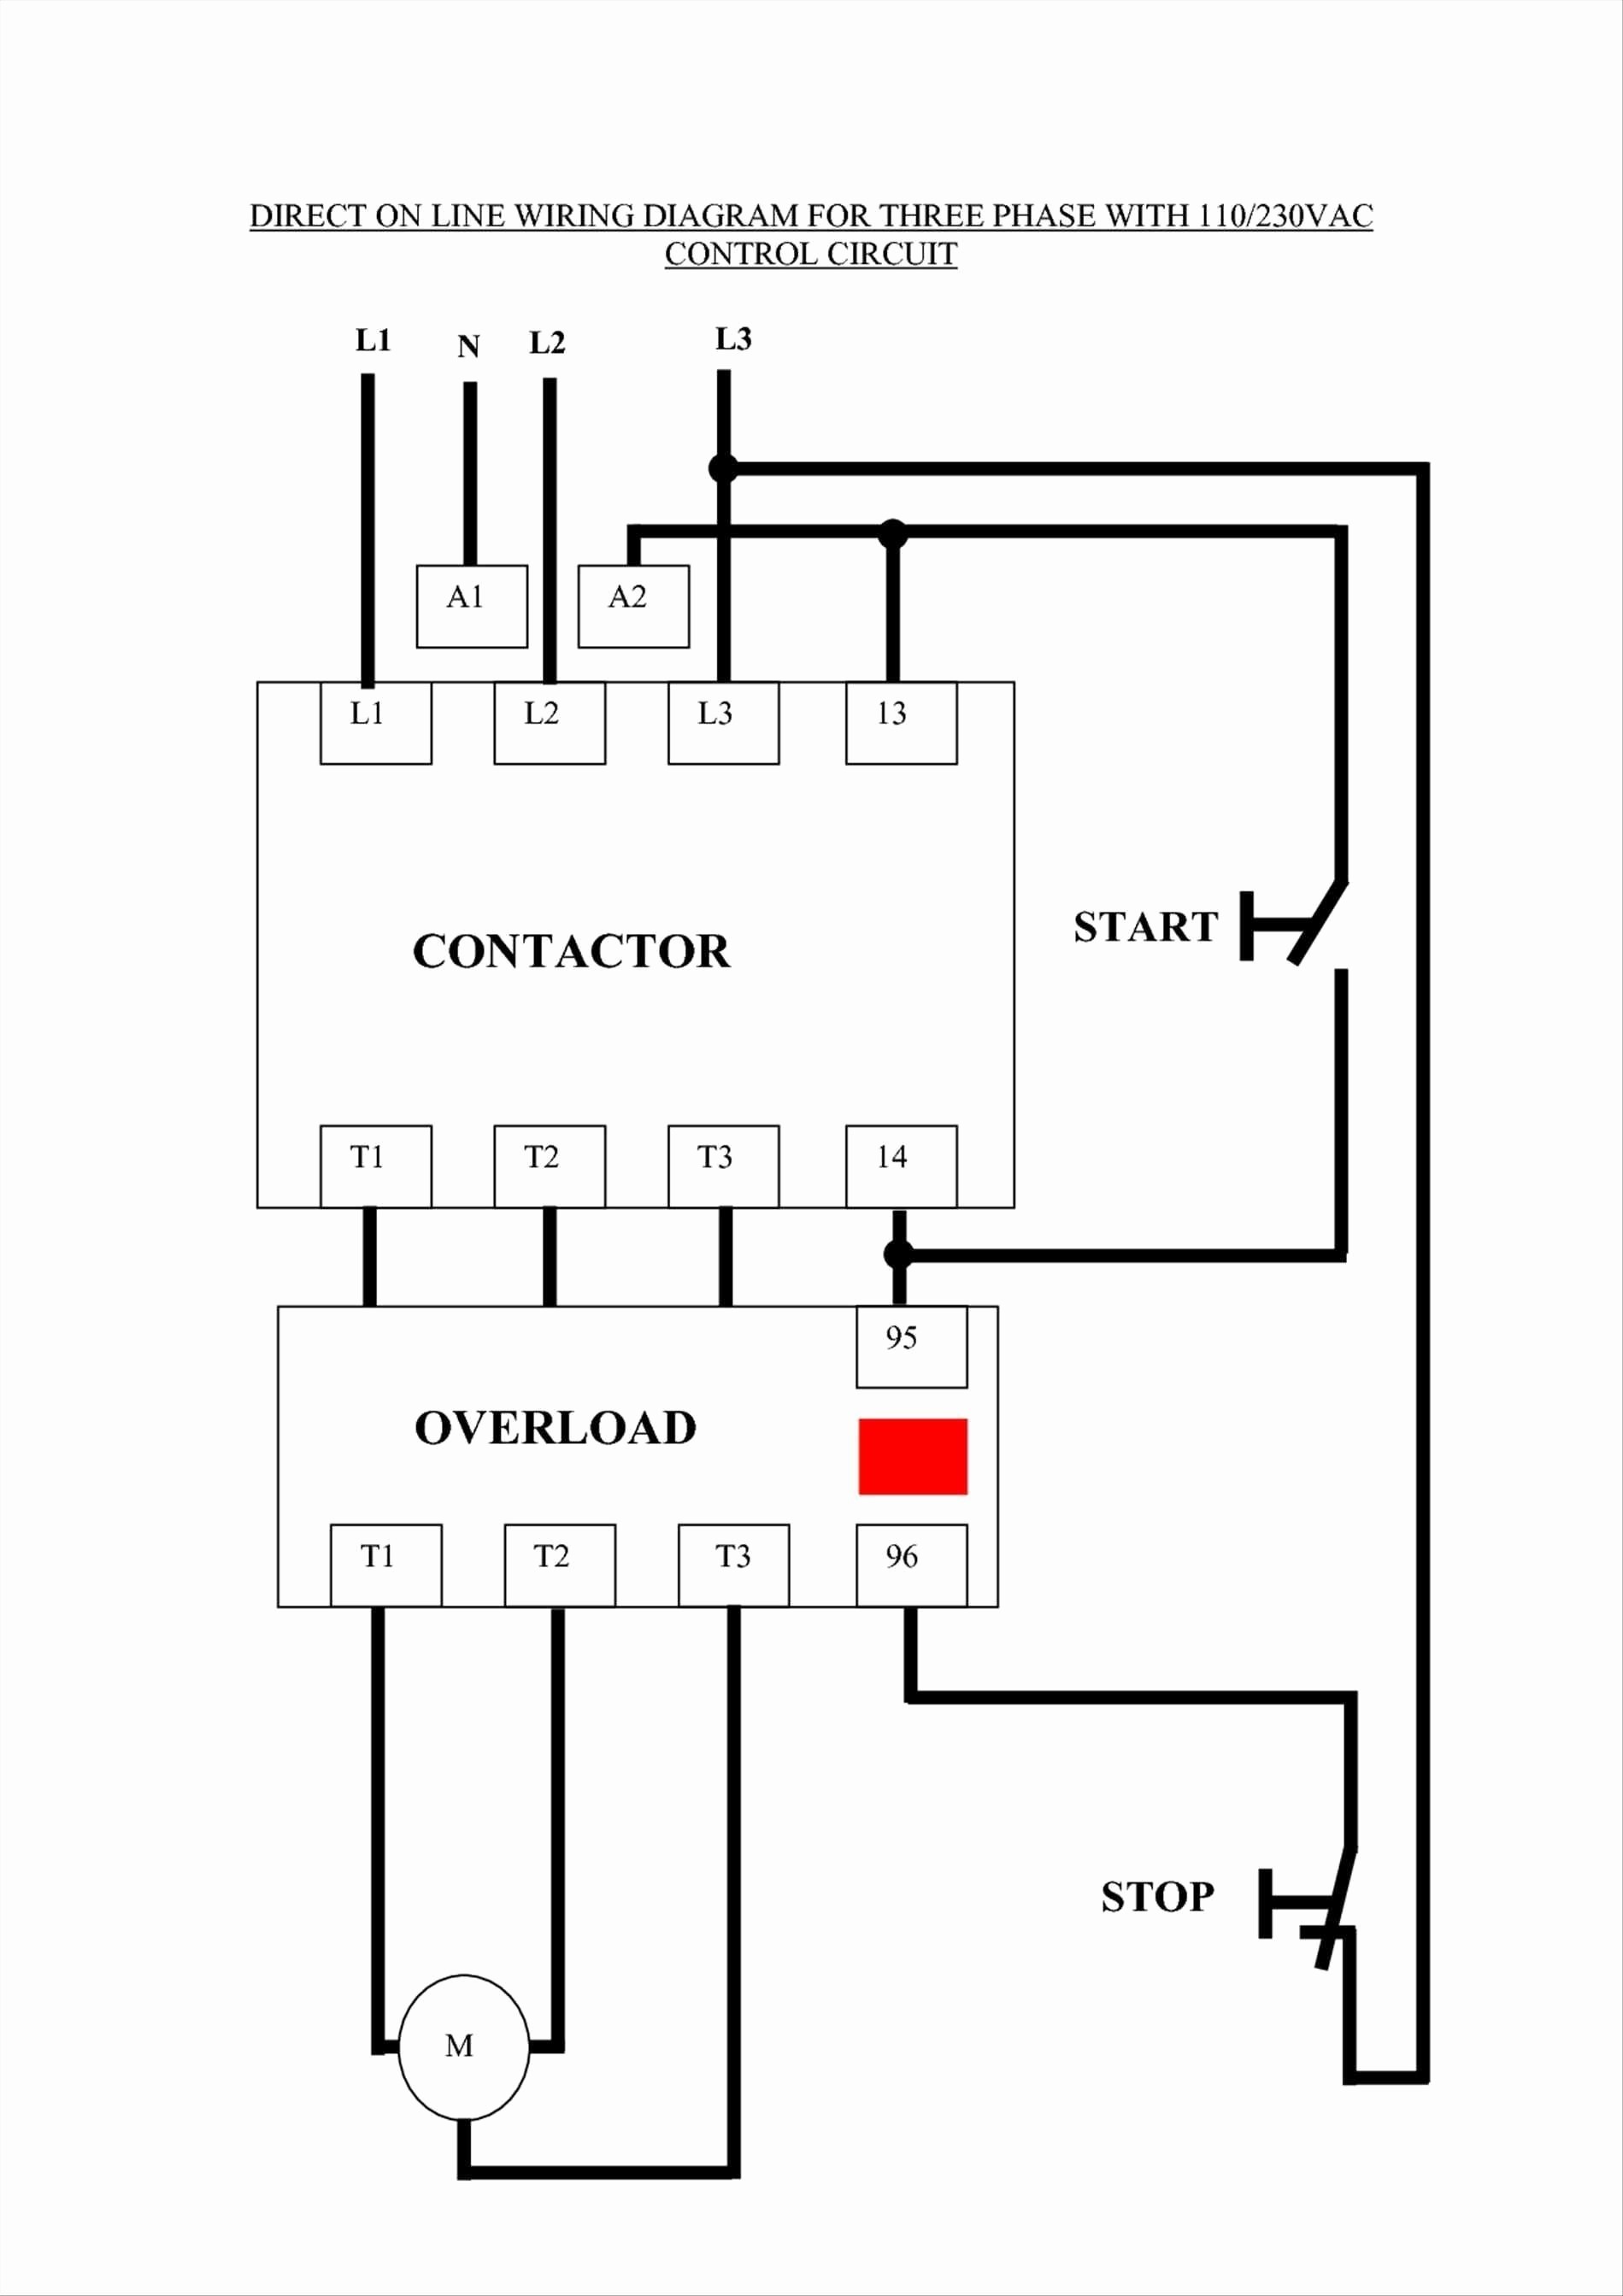 contactor wiring diagrams wiring diagram megawiring diagram for contactor wiring diagram show contactor wiring diagram a1